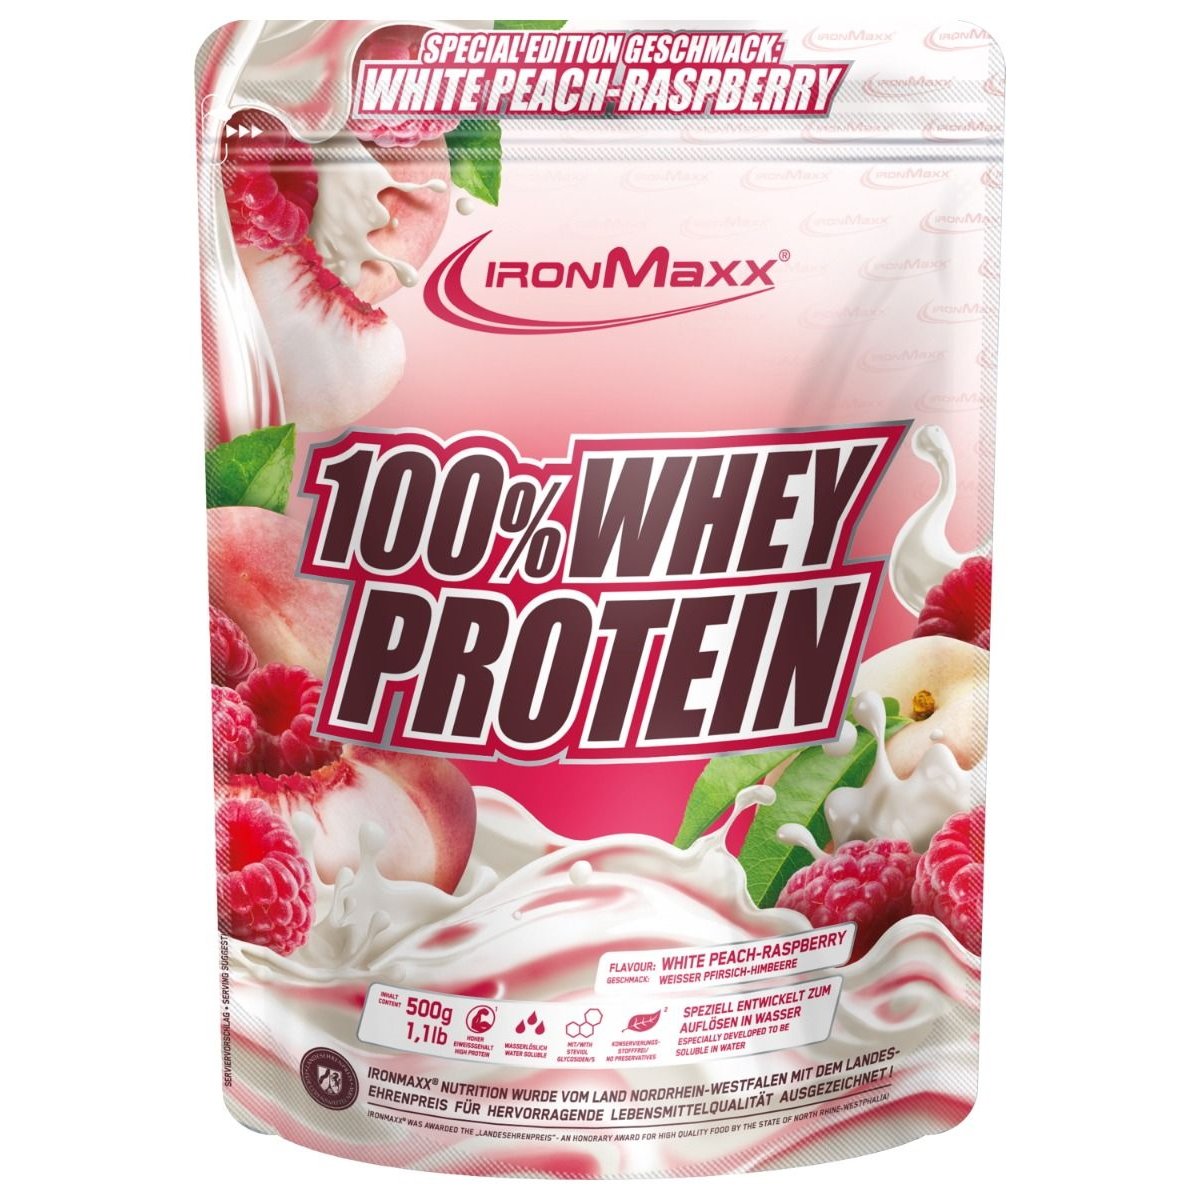 Протеин Ironmaxx 100% Whey Protein, 500 грамм Белый персик-малина,  ml, IronMaxx. Protein. Mass Gain recovery Anti-catabolic properties 